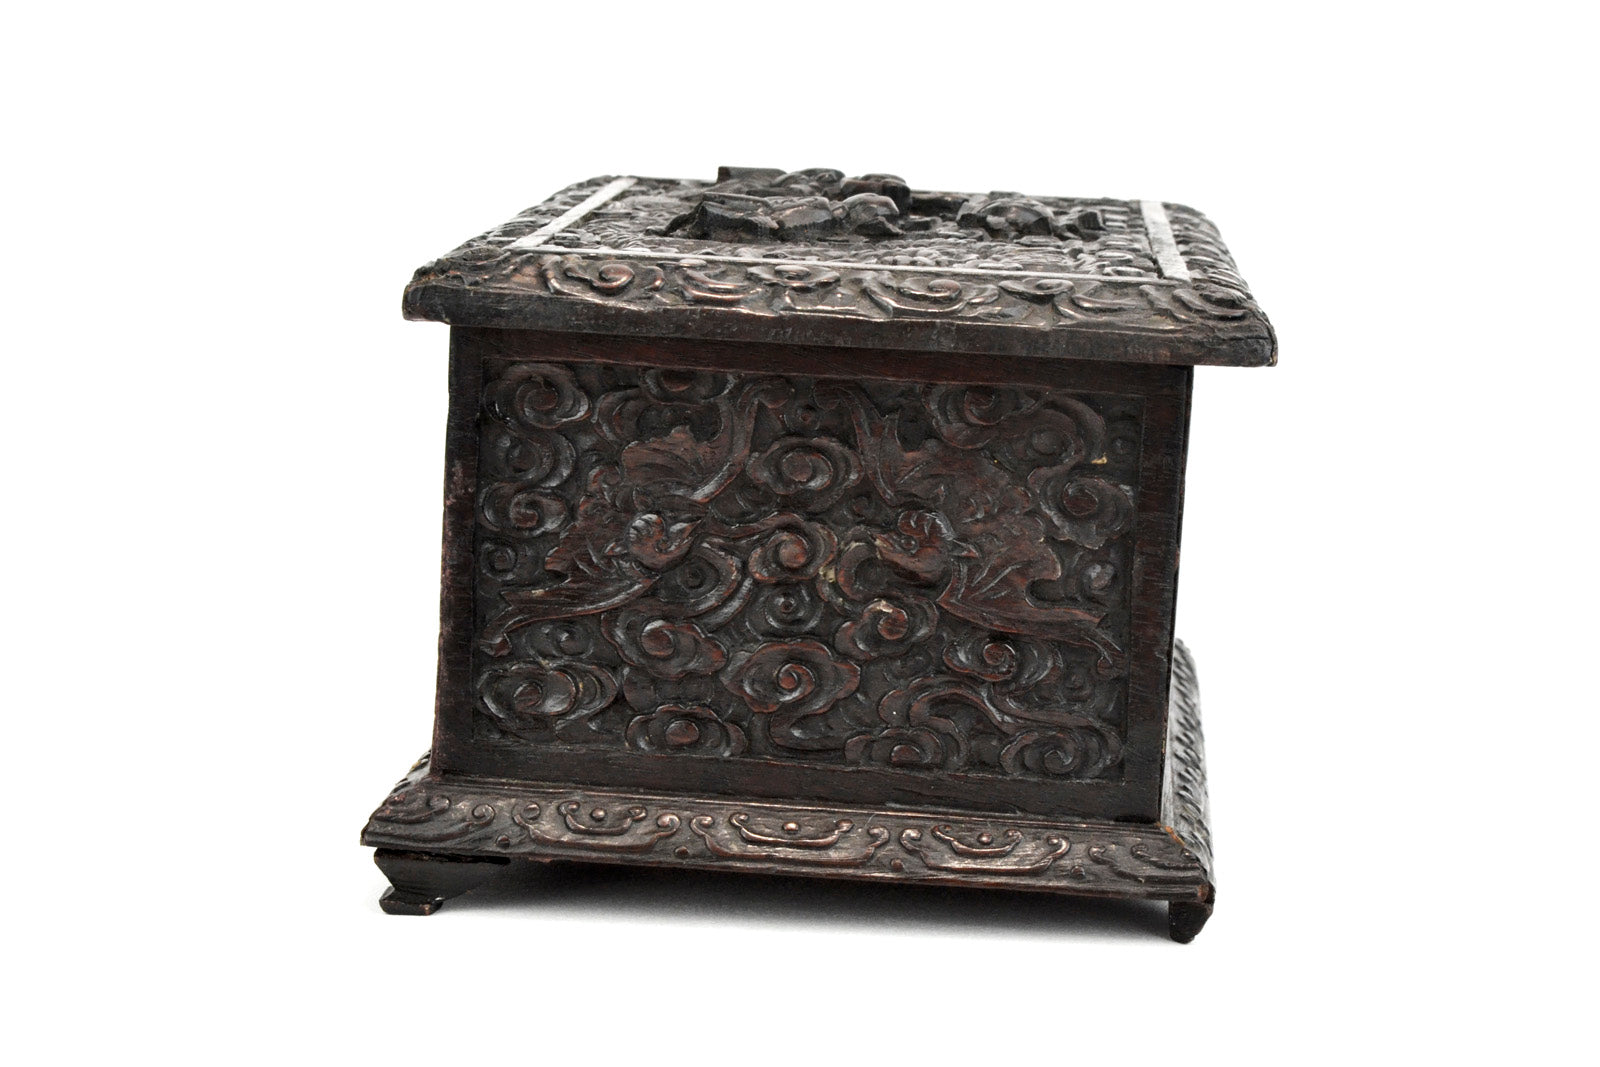 Qing Dynasty Hongmu Box